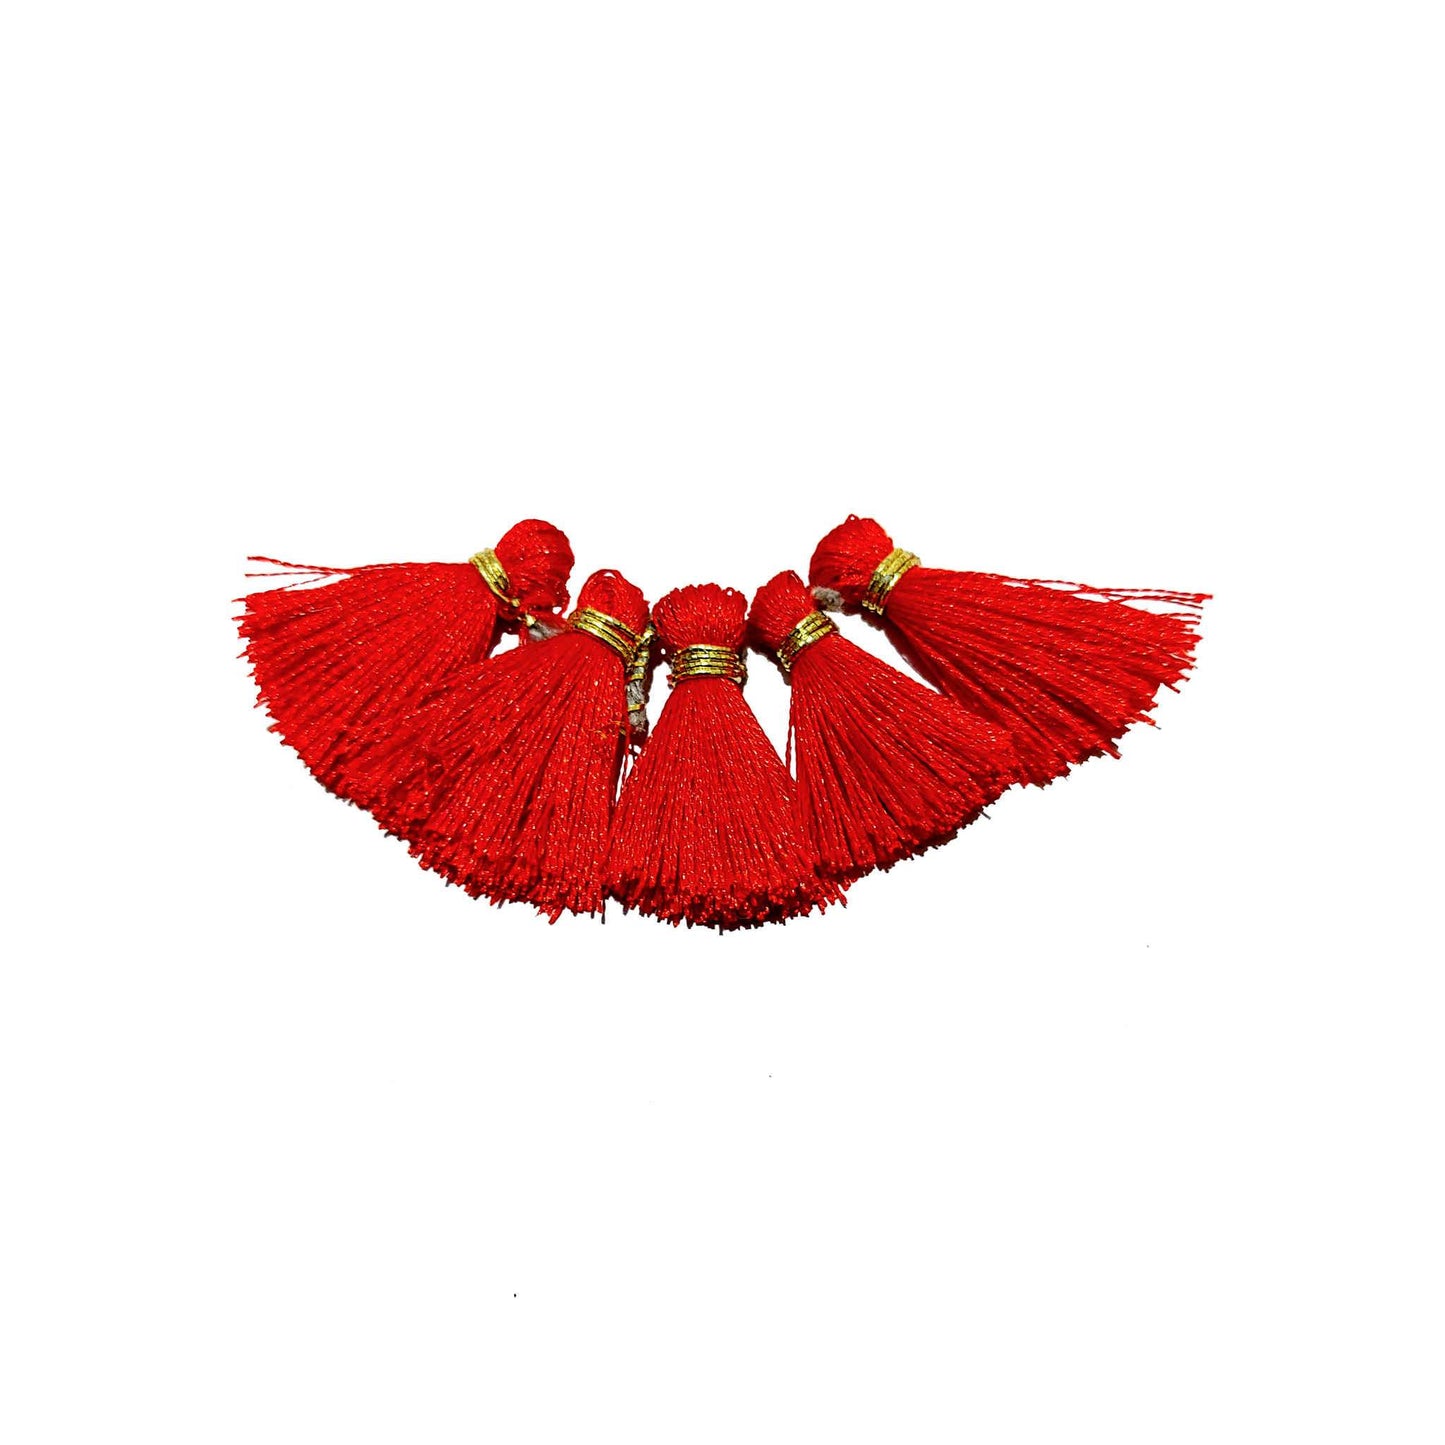 Indian Petals Handmade Mini Thread Fringe Tassel for Craft, Jewelry or Dressing - Design 857, Red